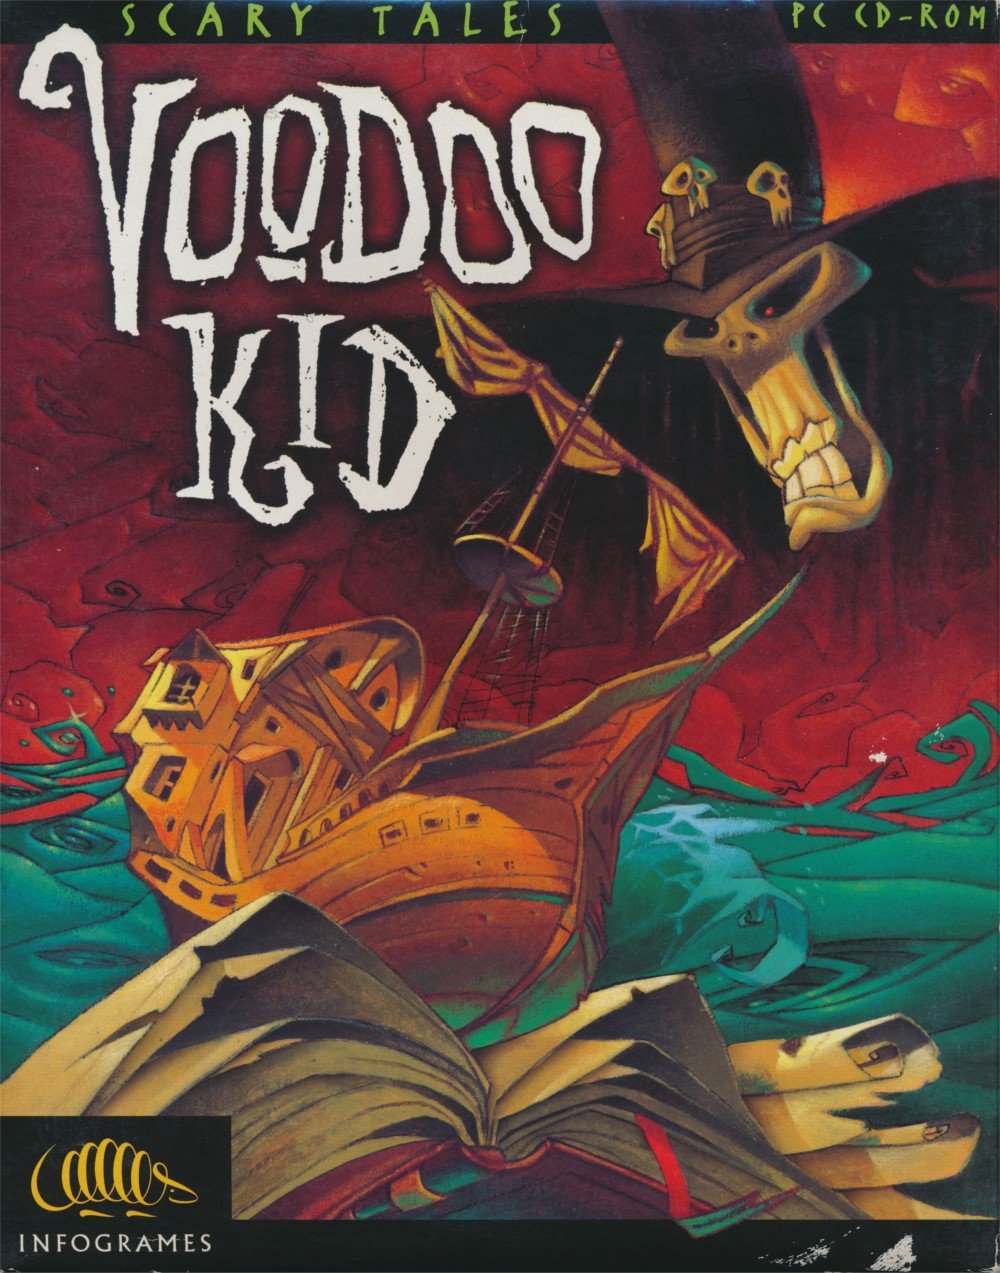 VooDoo Kid